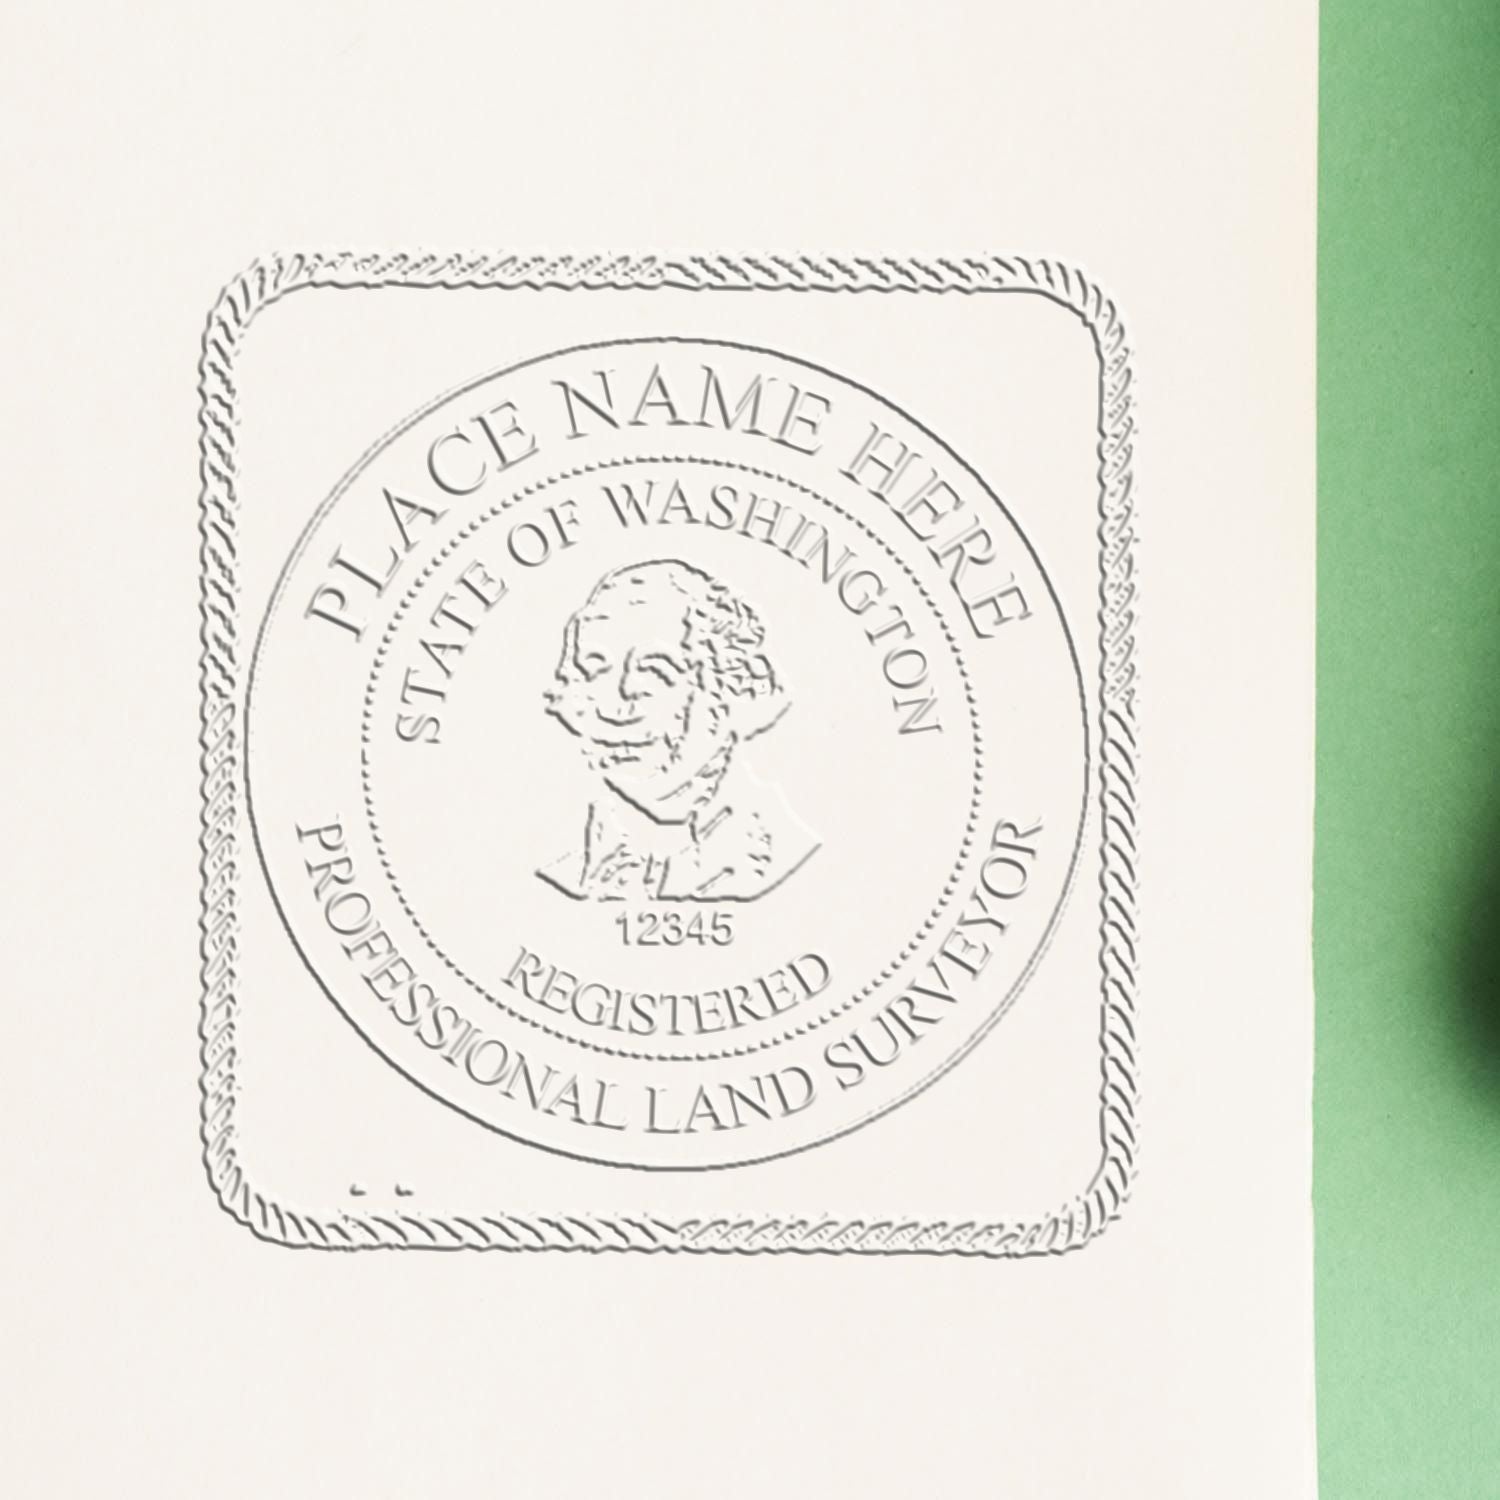 Finding the Perfect Fit: Customizing Your Washington Land Surveyor Stamp Size feature Image